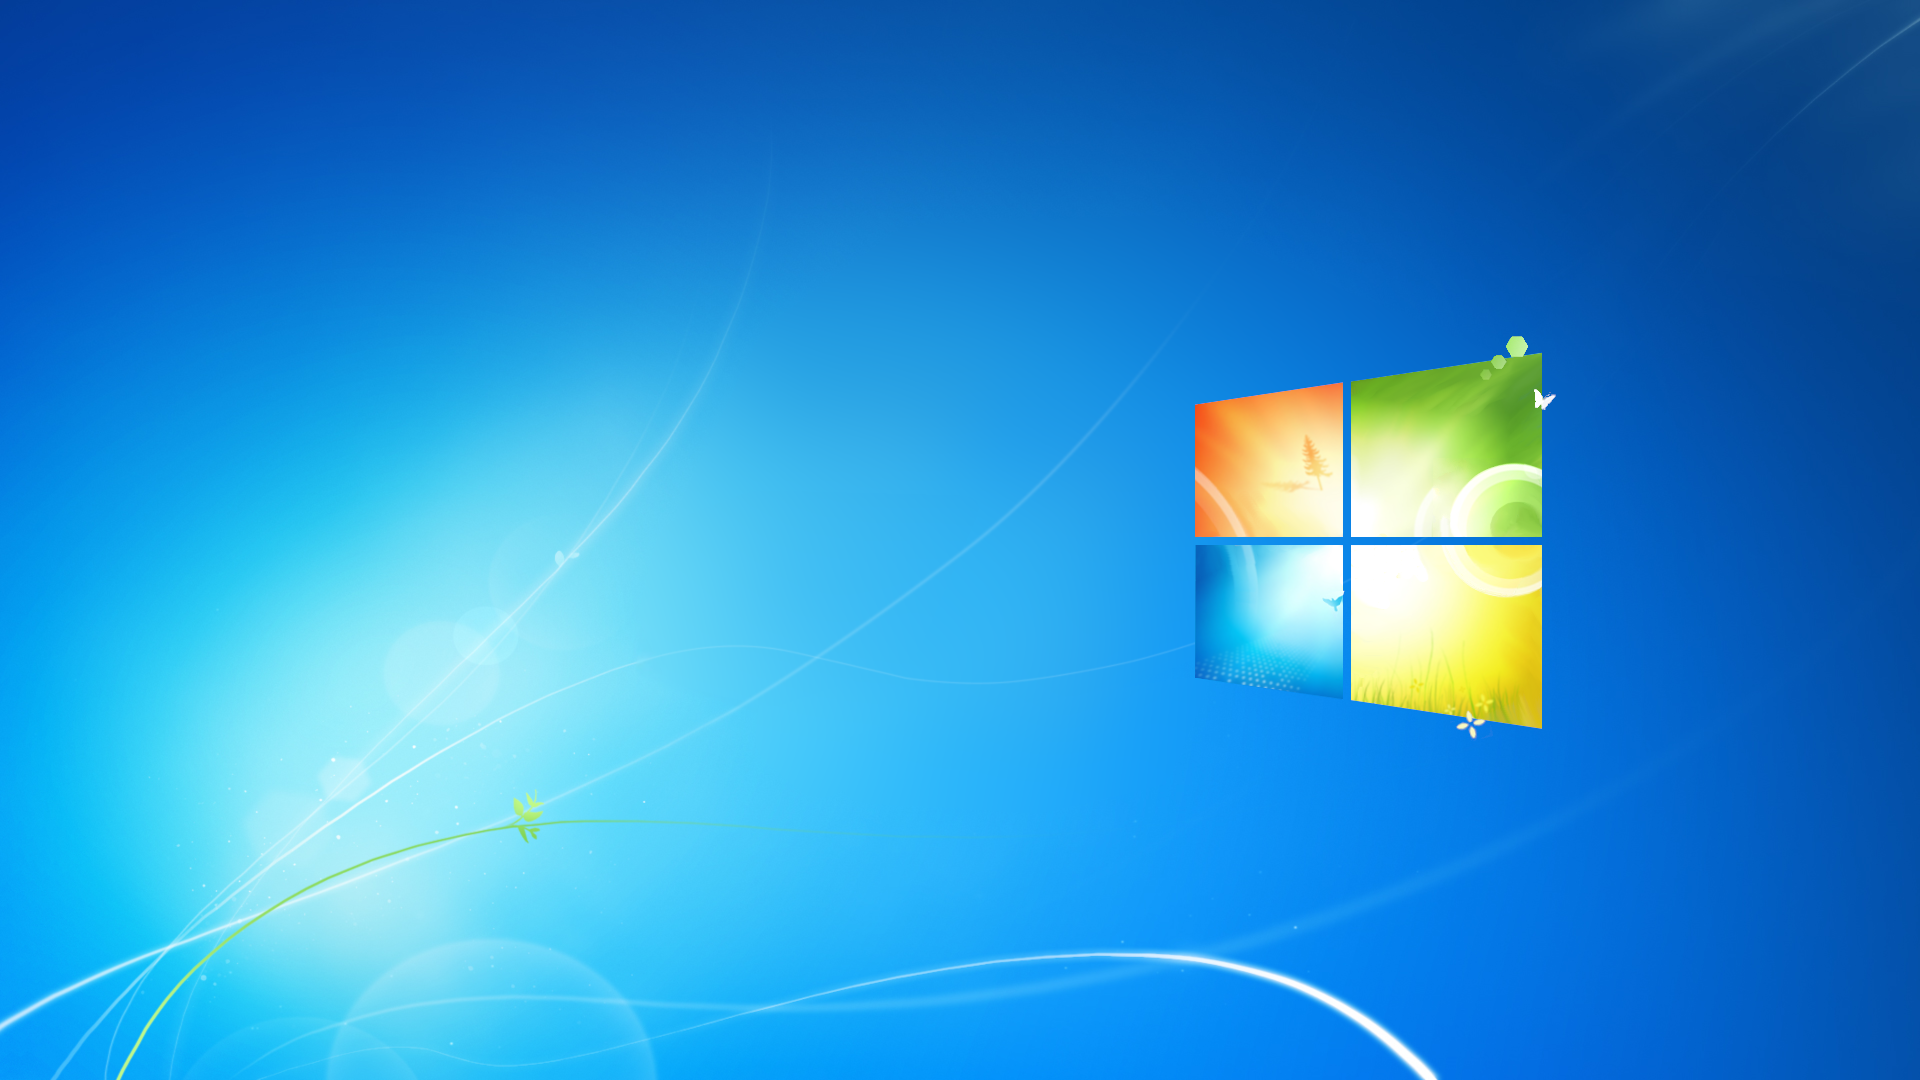 Windows 7 wallpaper önerisi | Technopat Sosyal